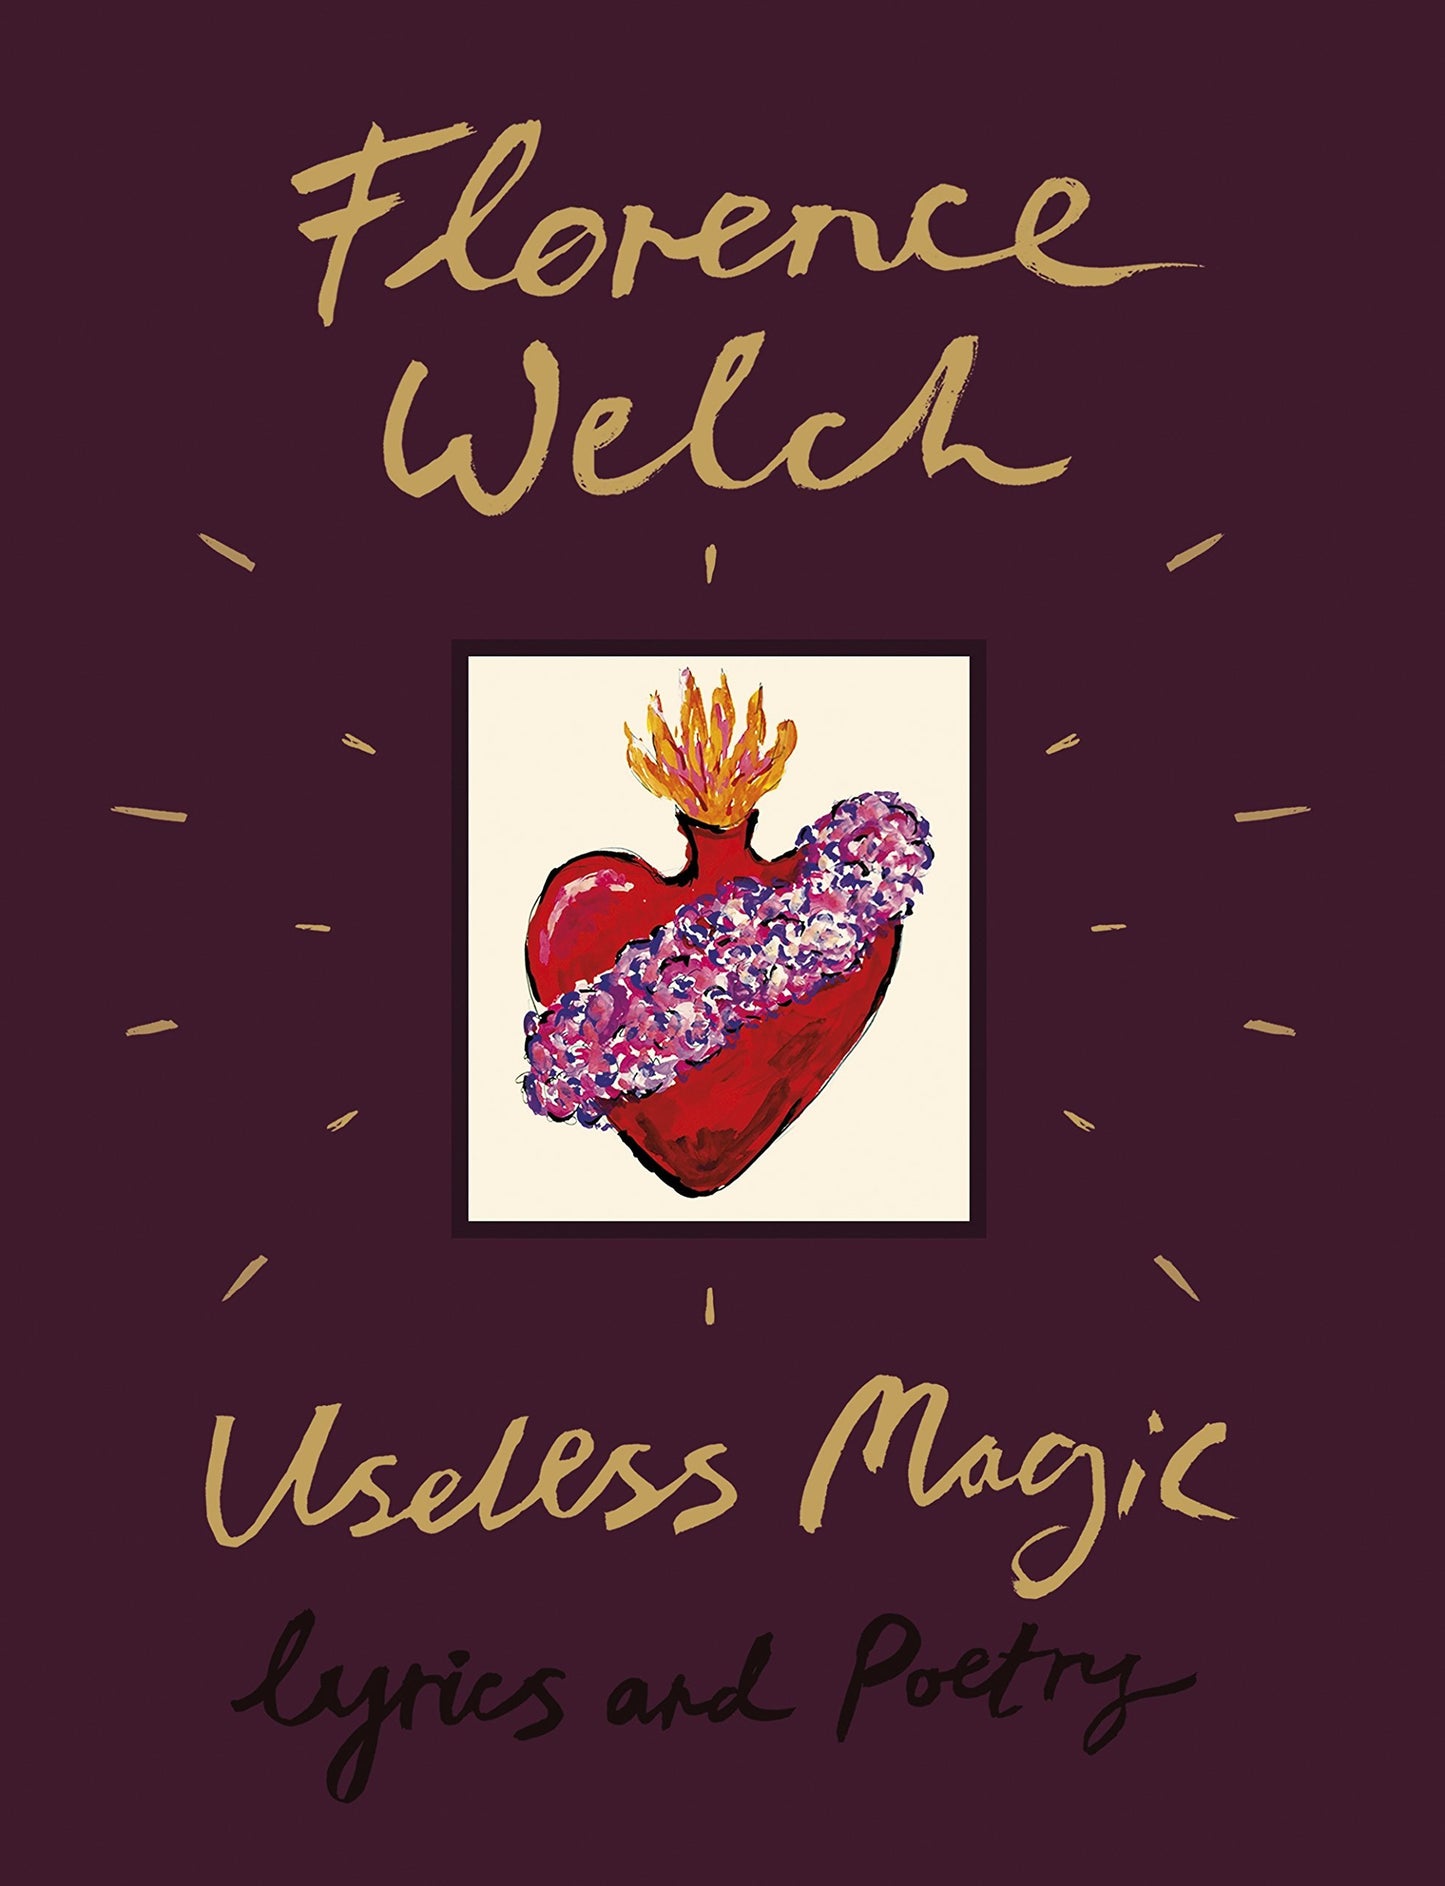 Useless Magic: Lyrics and Poetry- Florence Welch